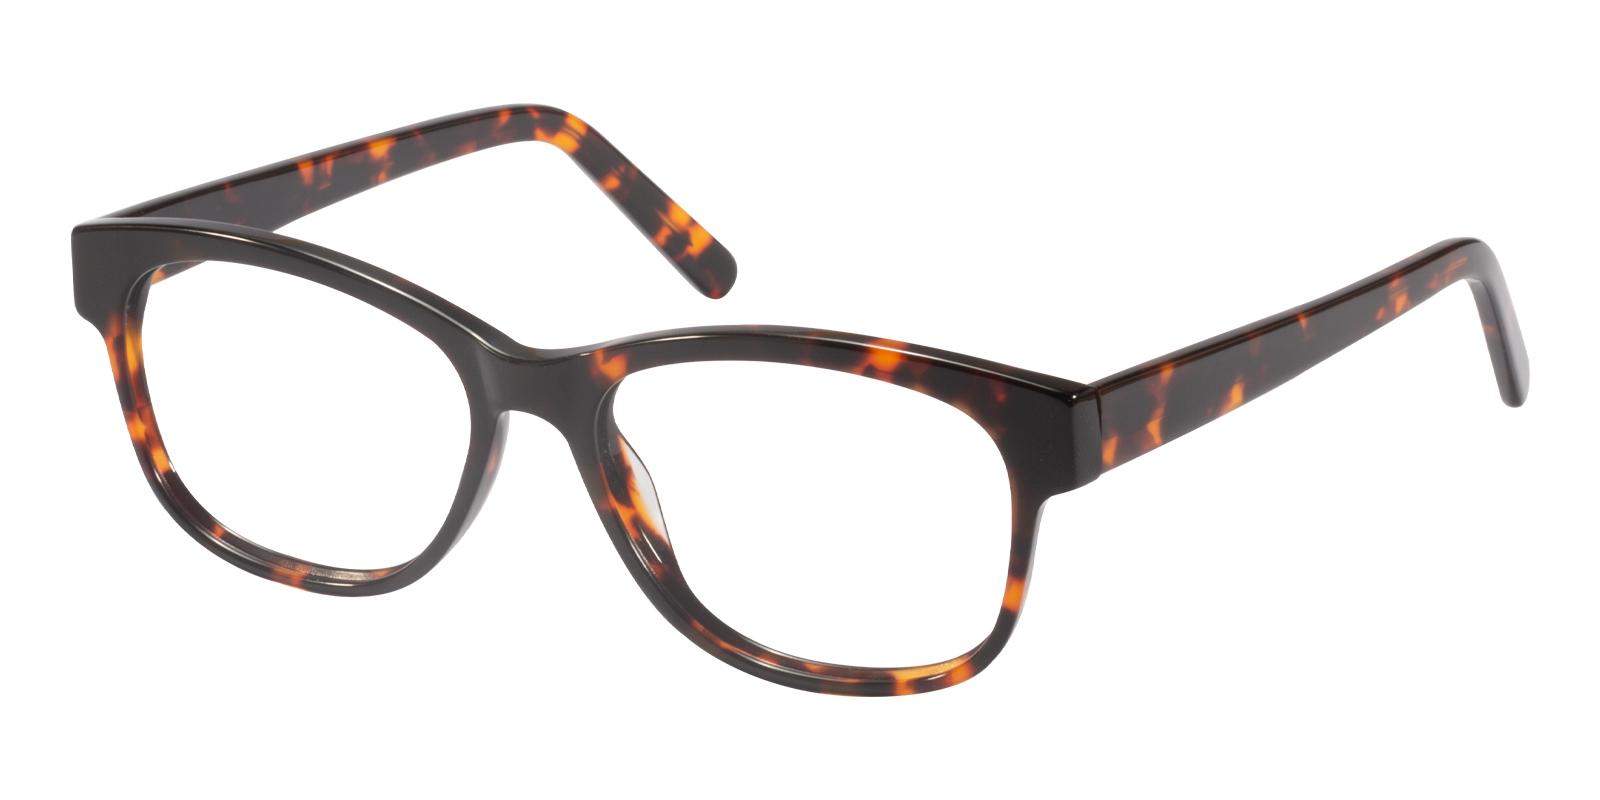 Doubell Pattern Acetate Eyeglasses , UniversalBridgeFit Frames from ABBE Glasses